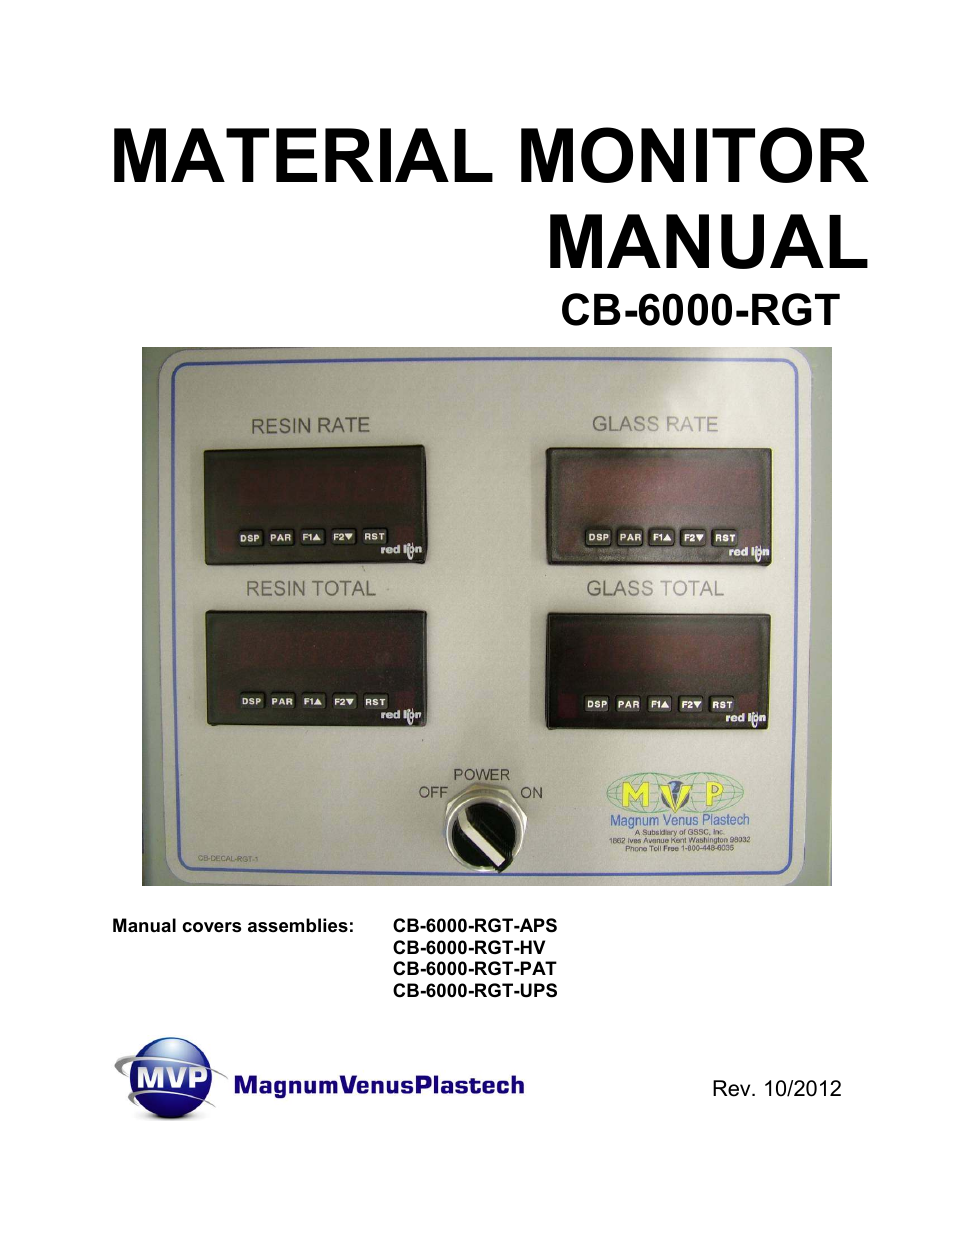 CB-6000-RGT MATERIAL MONITOR